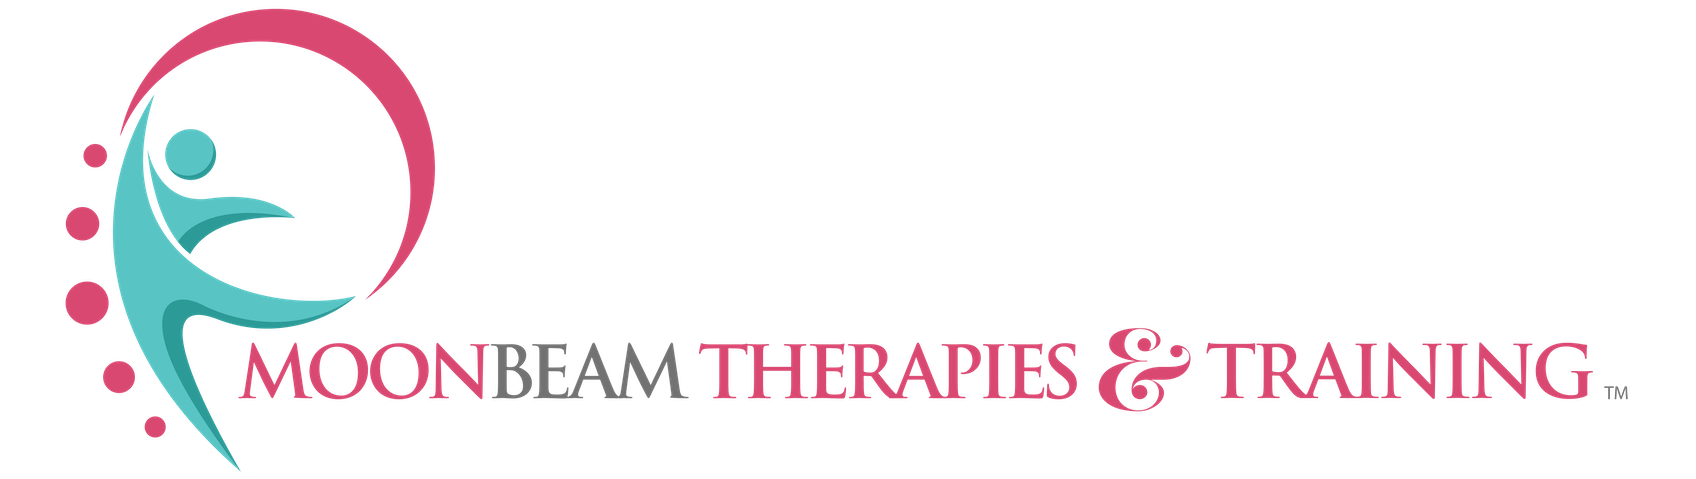 Moonbeam Therapies & Training